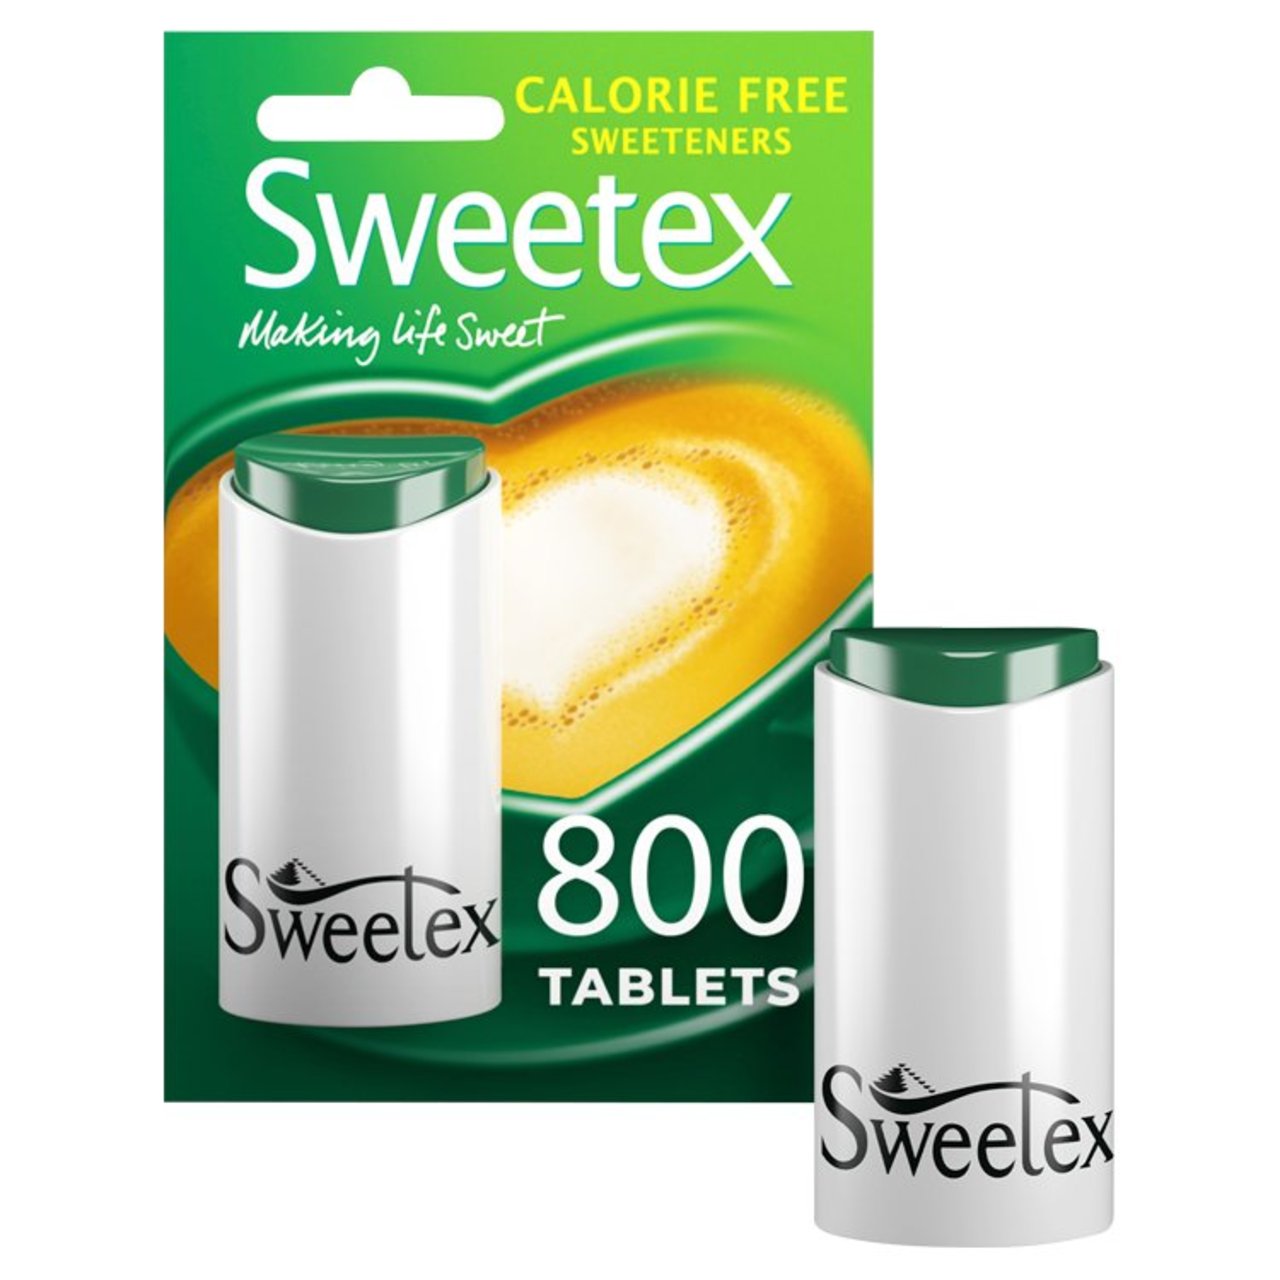 Sweetex Calorie Free Sweeteners 800 Tablets*